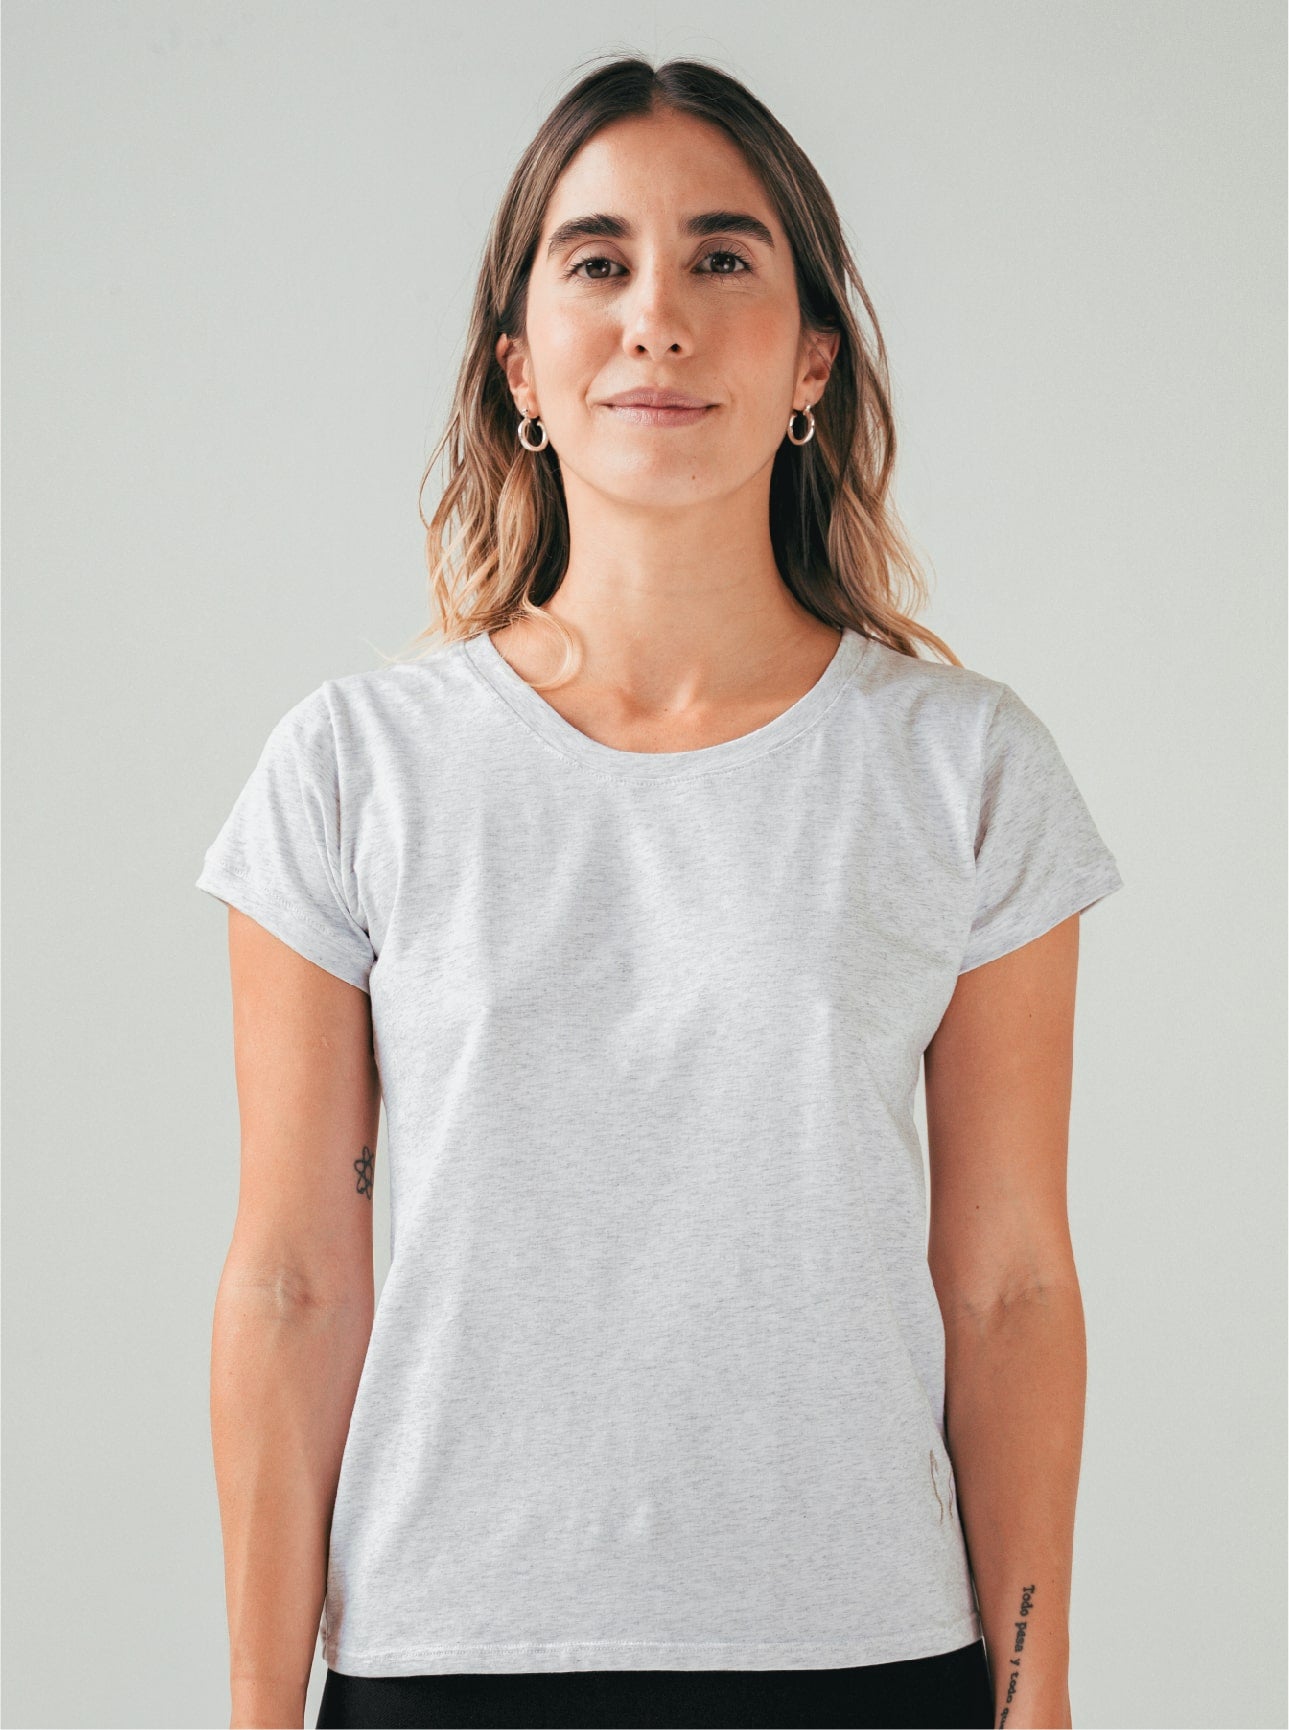 Camiseta Manga Corta para Mujer